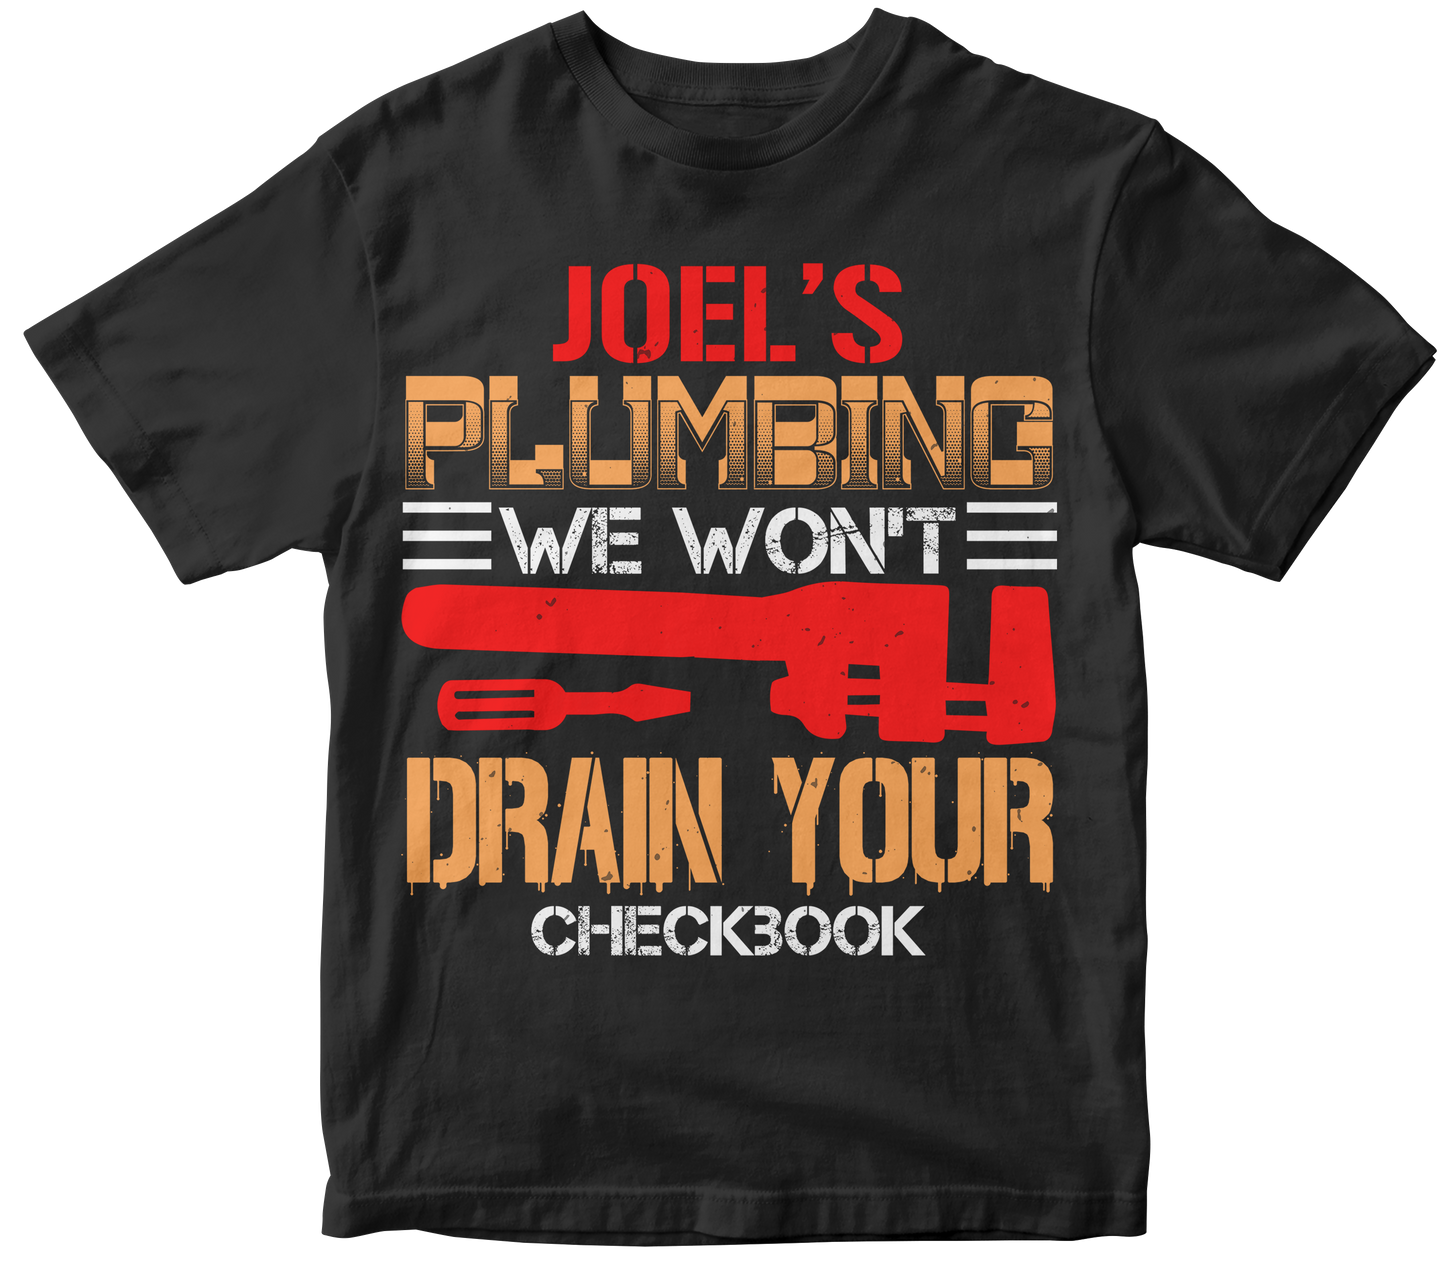 Joel s plumbing we won t drain your checkbook